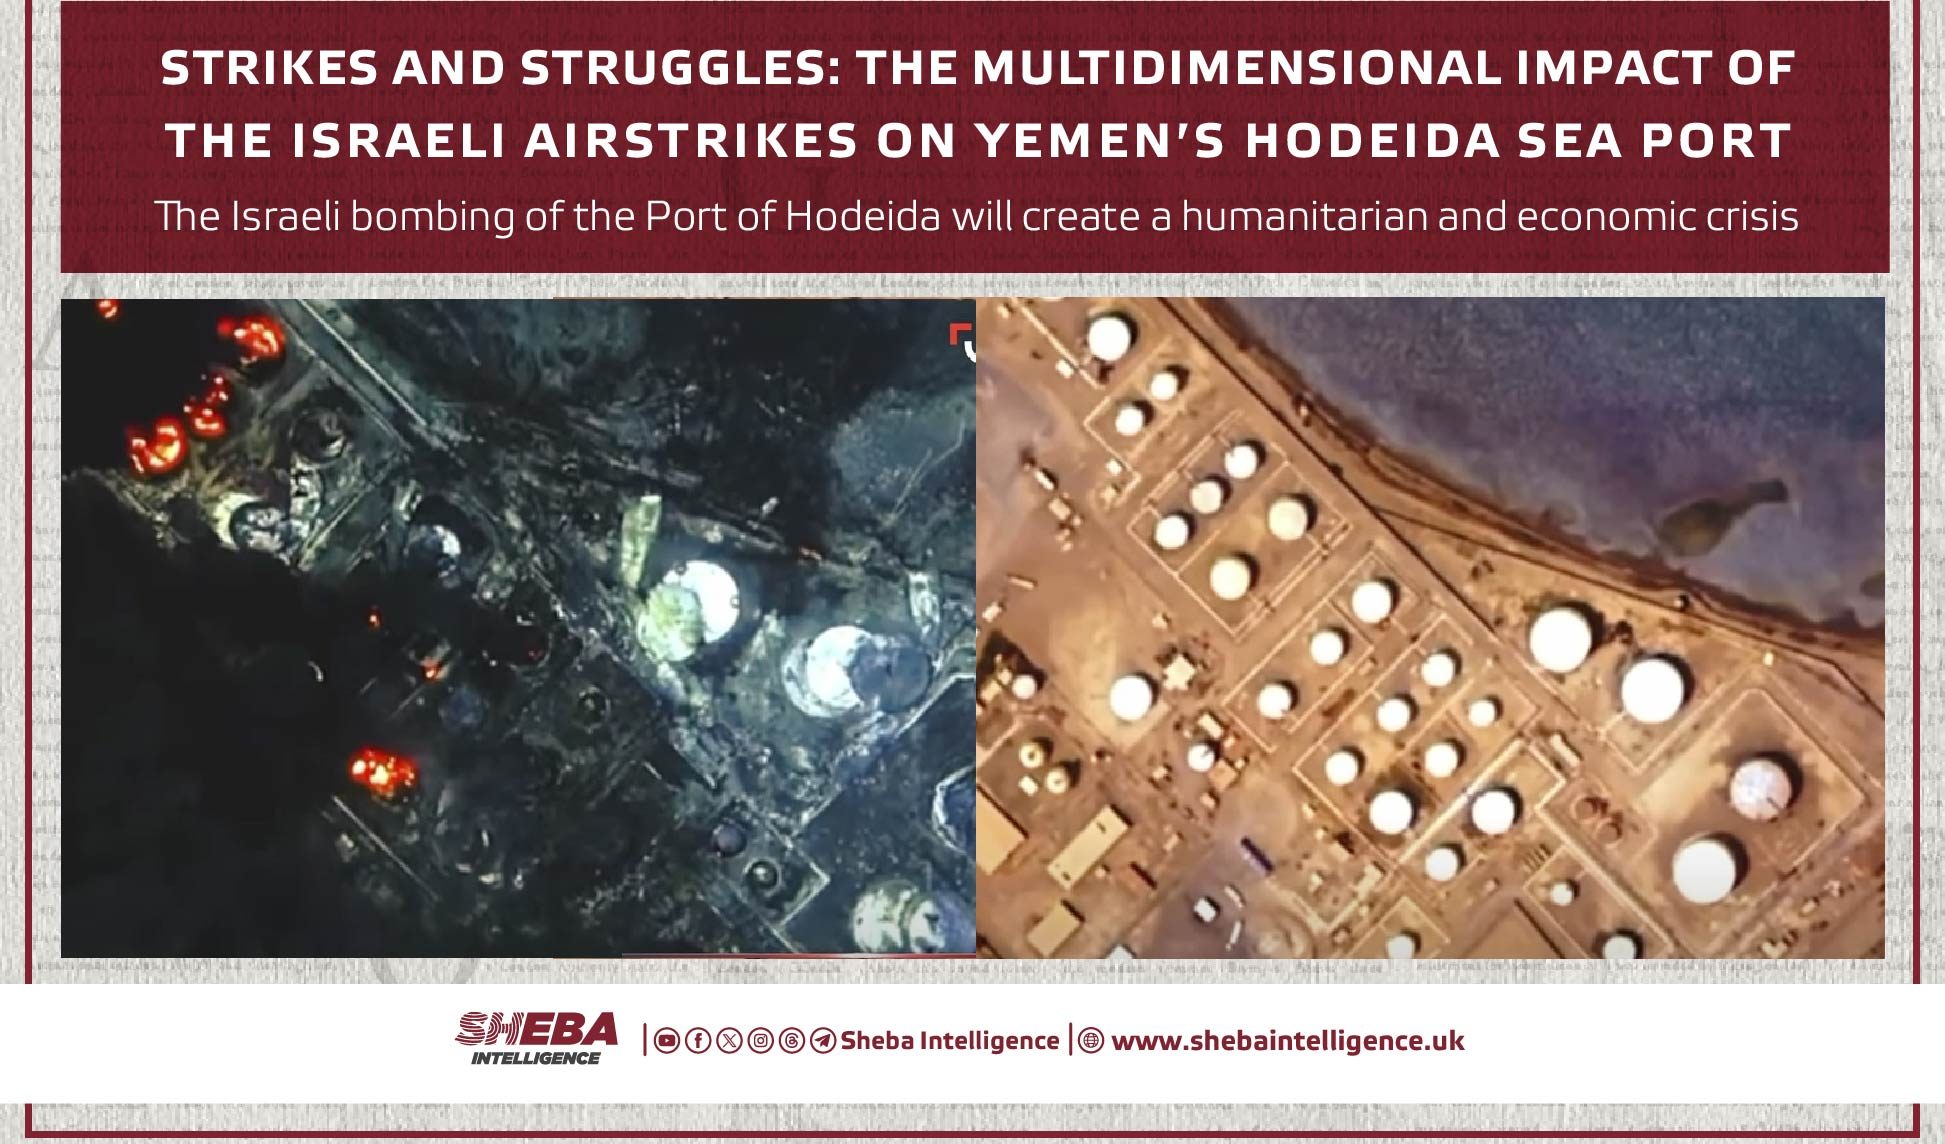 Strikes and Struggles: The Multidimensional Impact of the Israeli Airstrikes on Yemen's Hodeida Sea Port